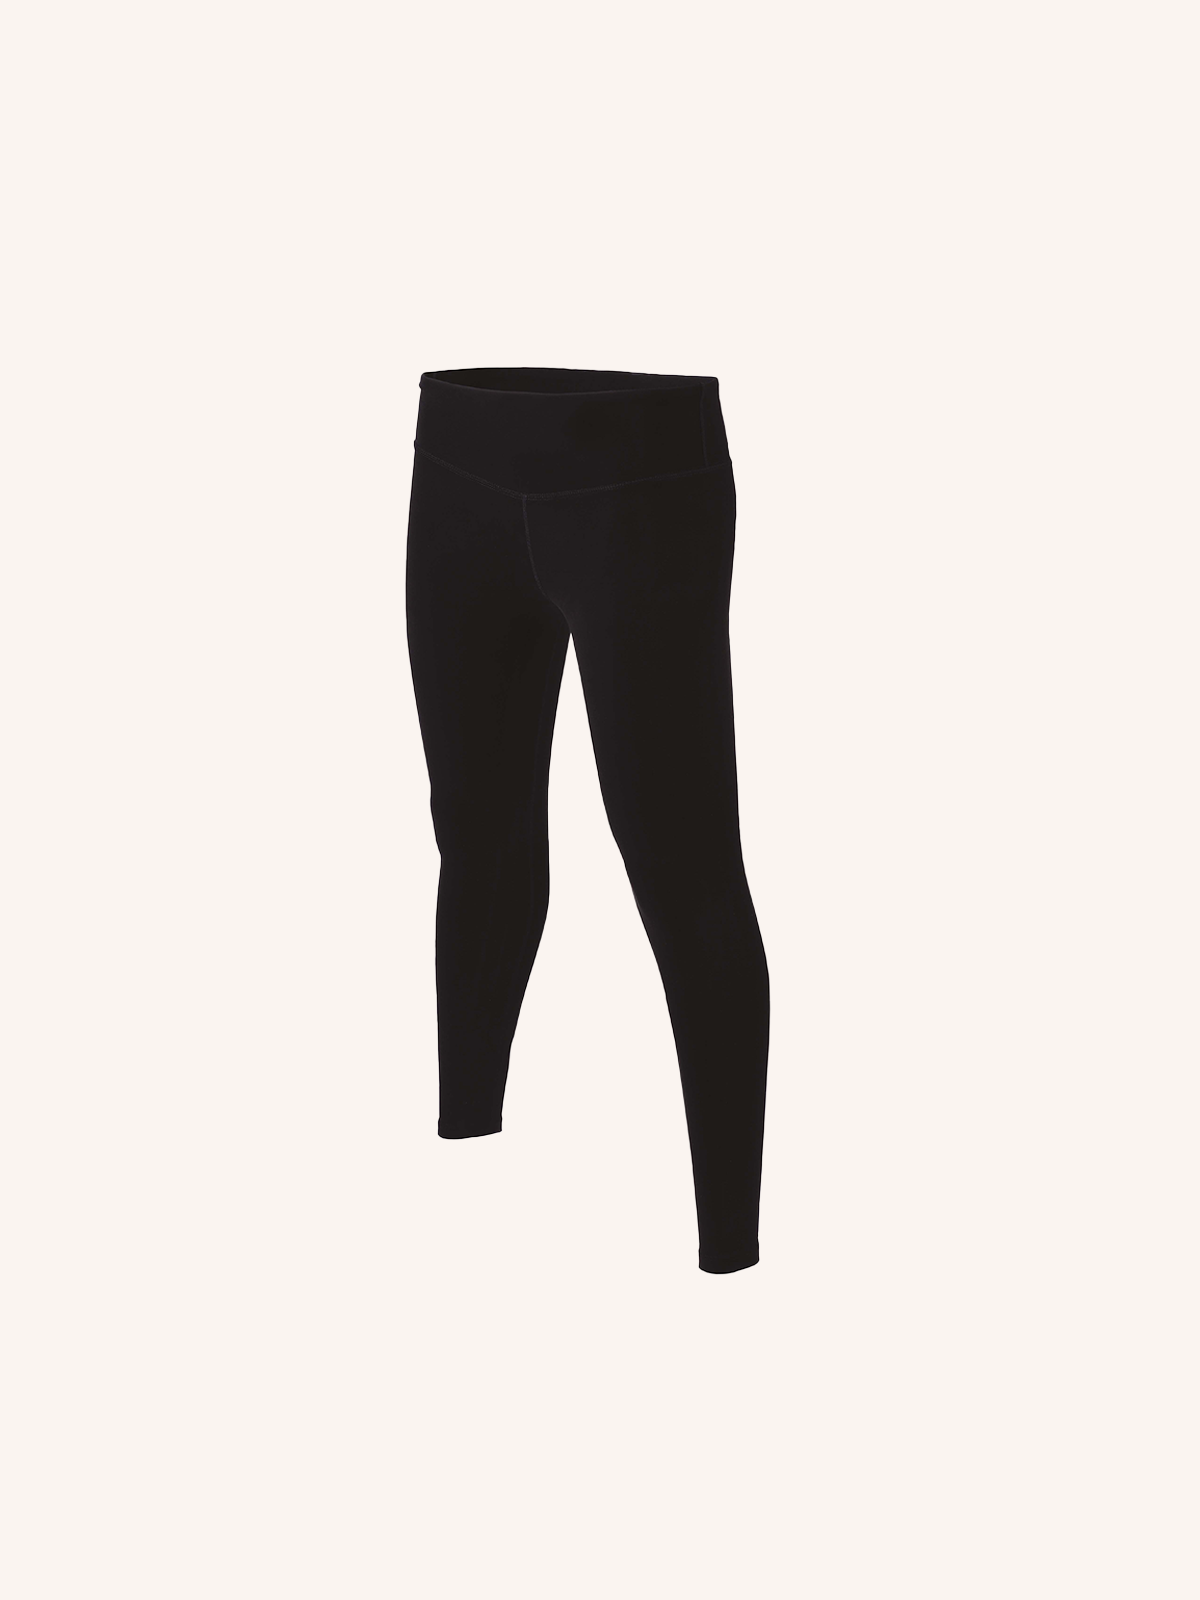 Fitness Leggings for Women | Micromodal fabric | Single Pack | PRS 203